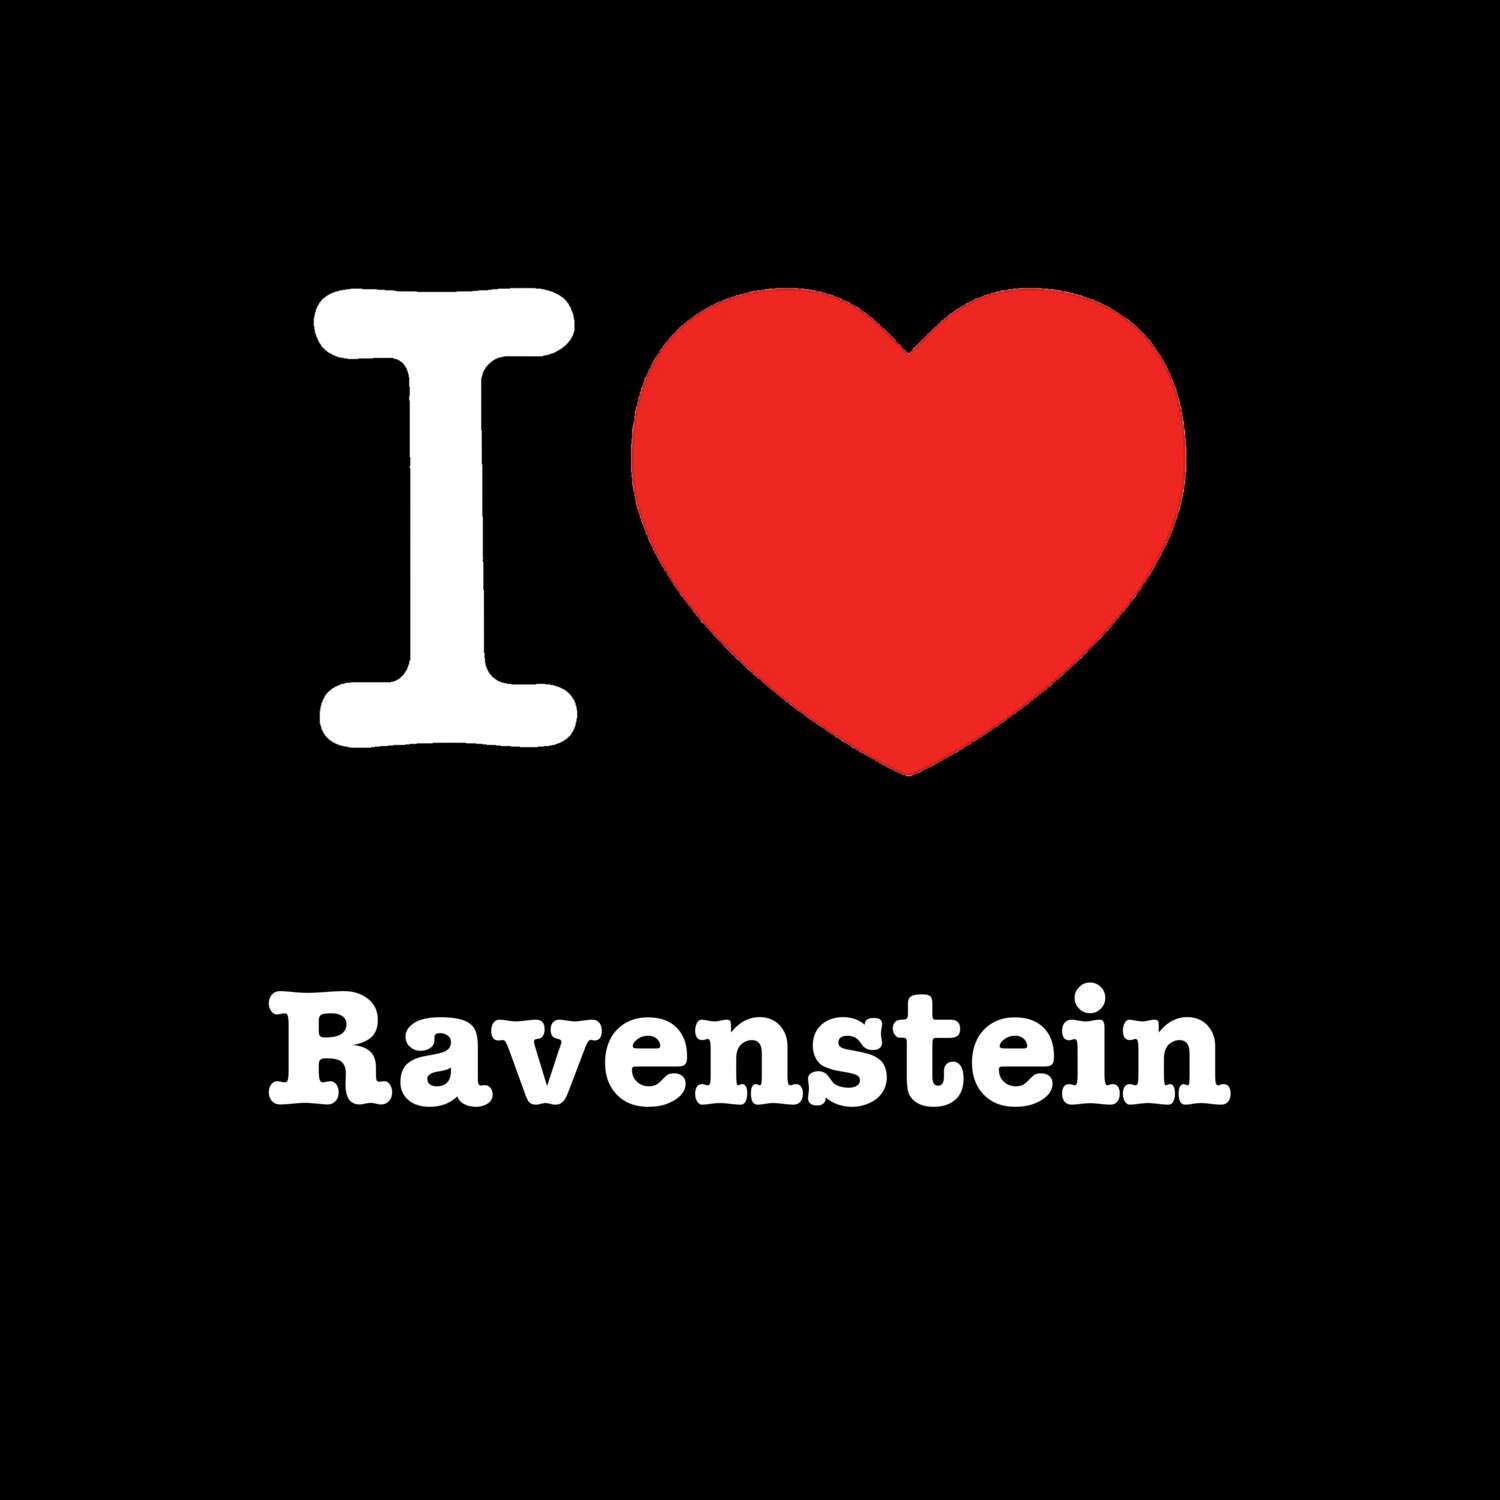 Ravenstein T-Shirt »I love«